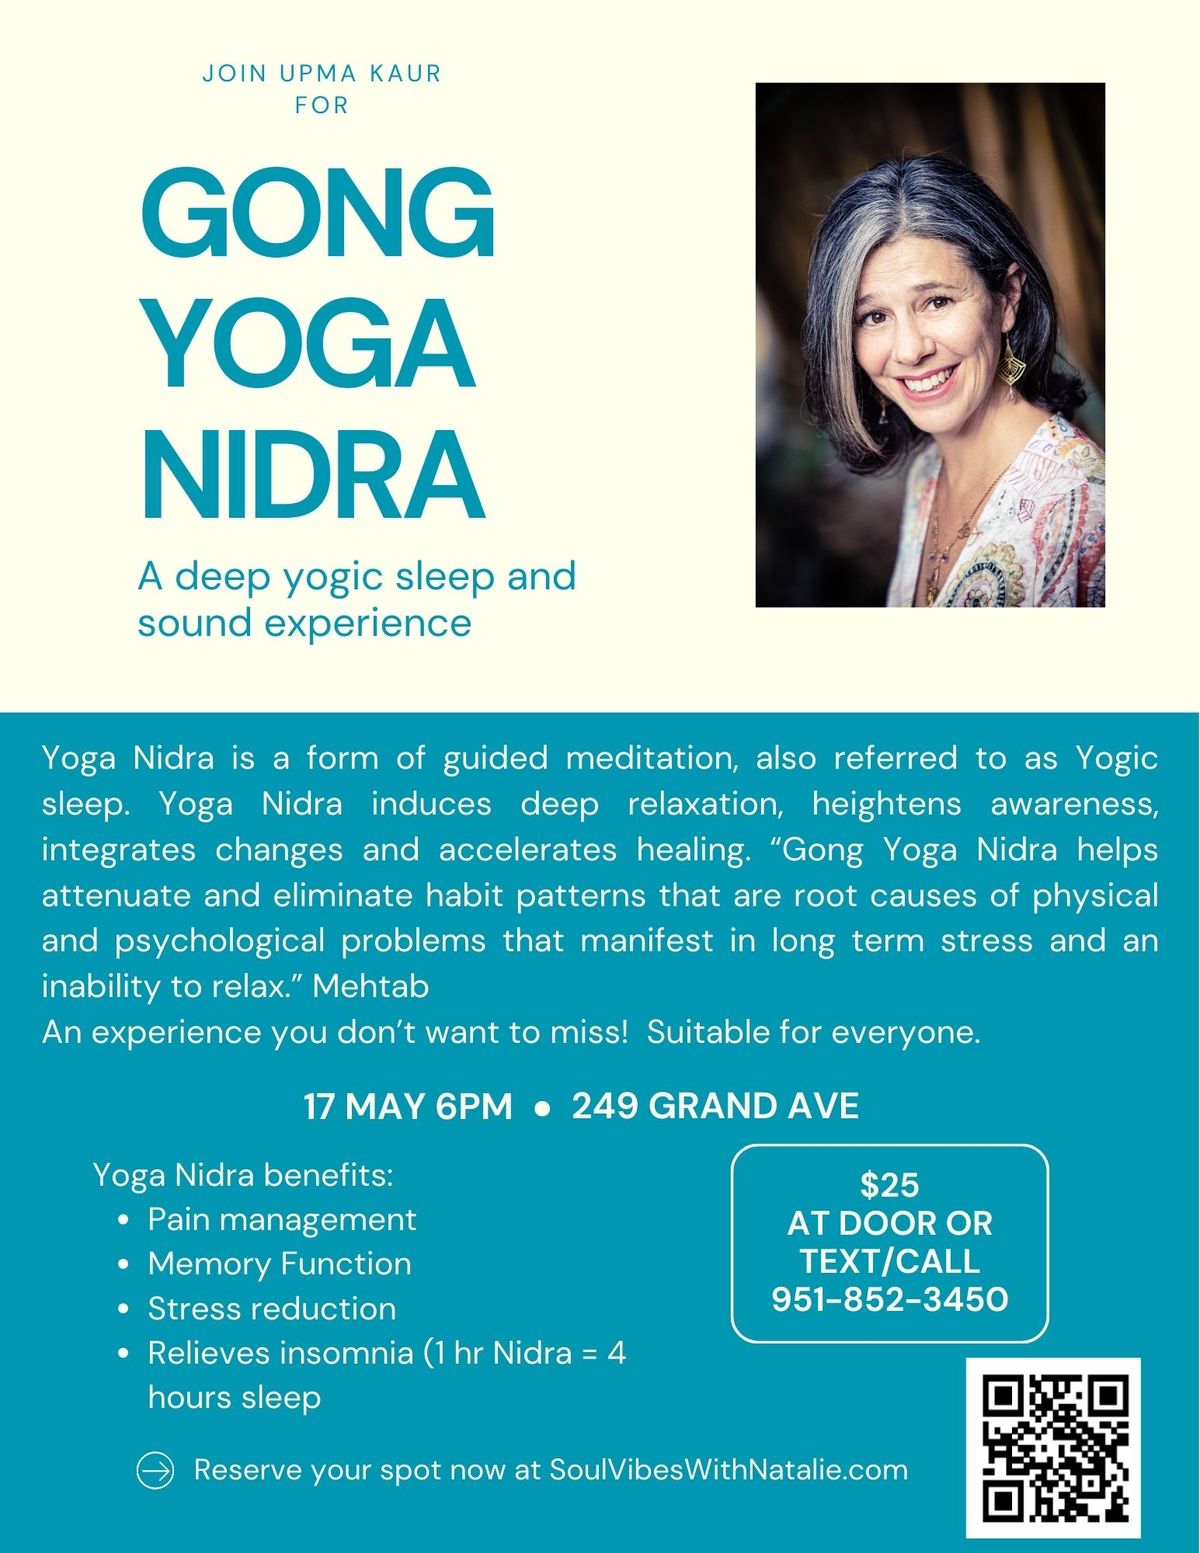 Gong Yoga Nidra - A deep yogic sleep and sound experience